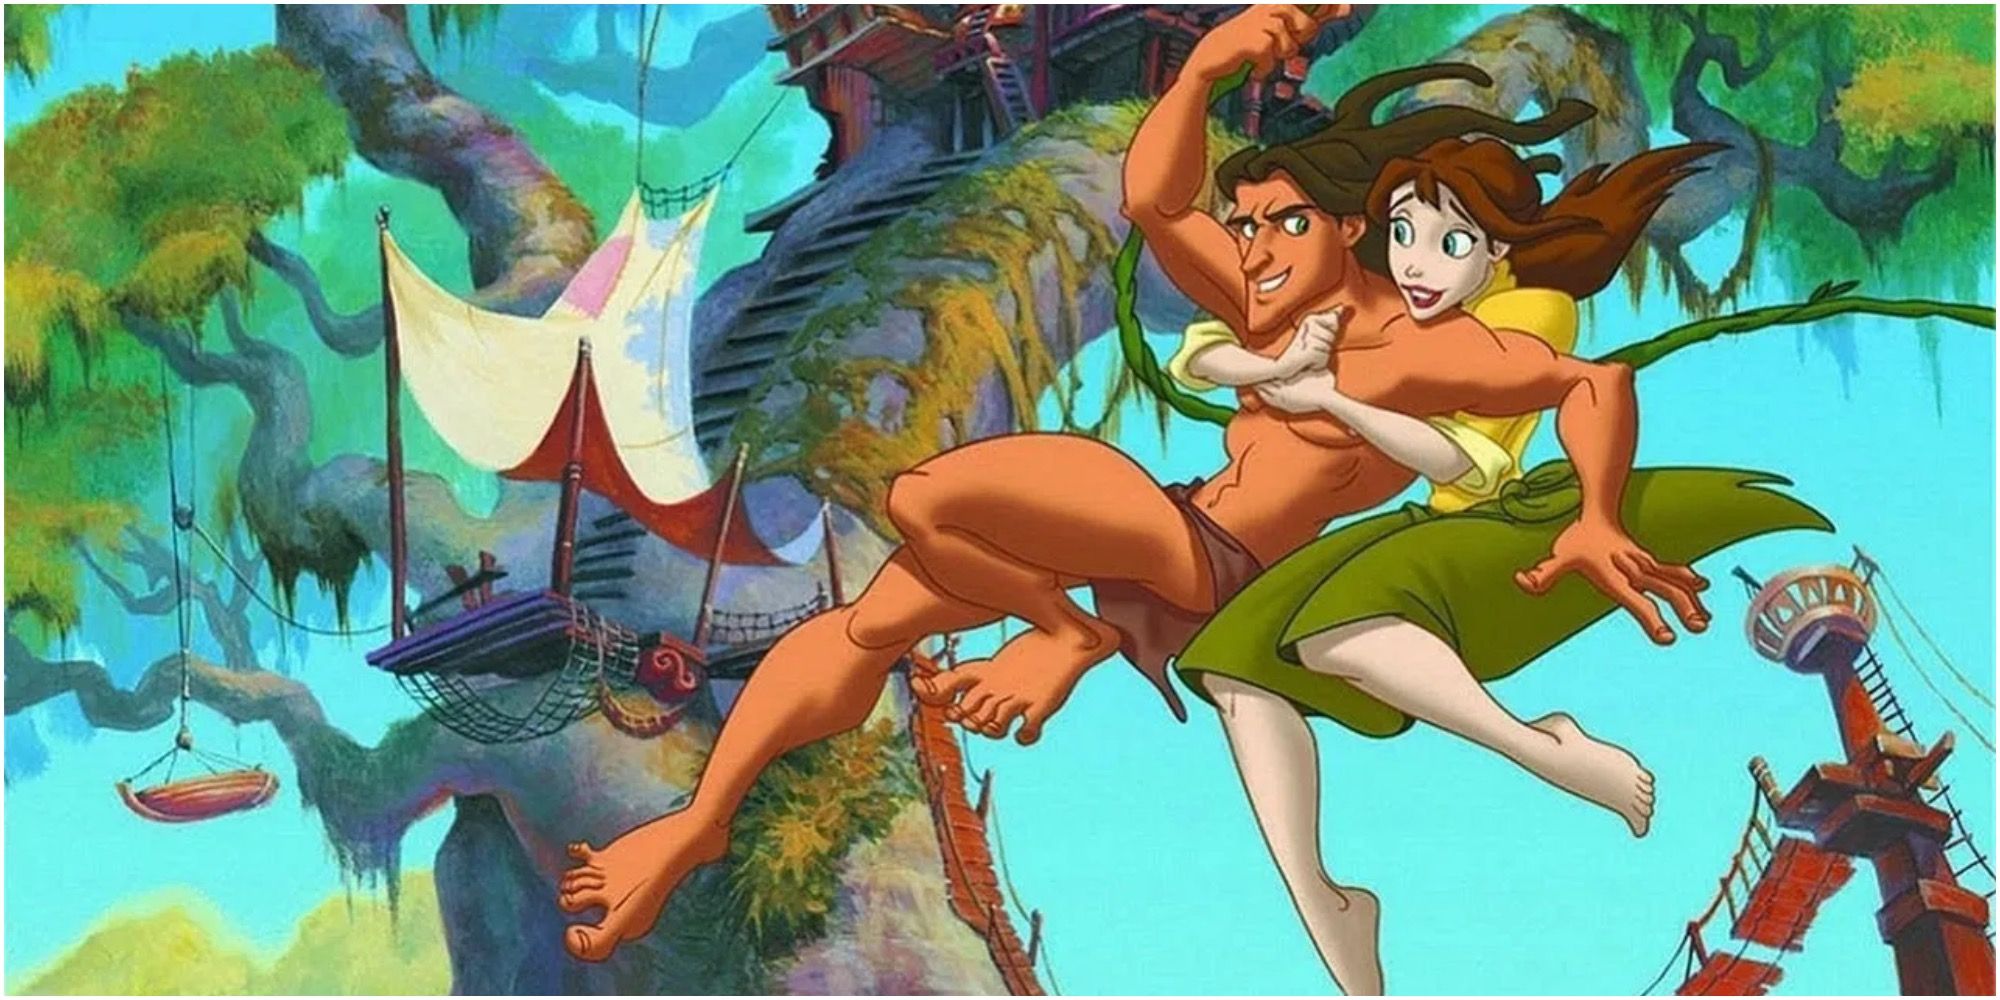 Cartoon: The Legend Of Tarzan On ABC Saturday Mornings